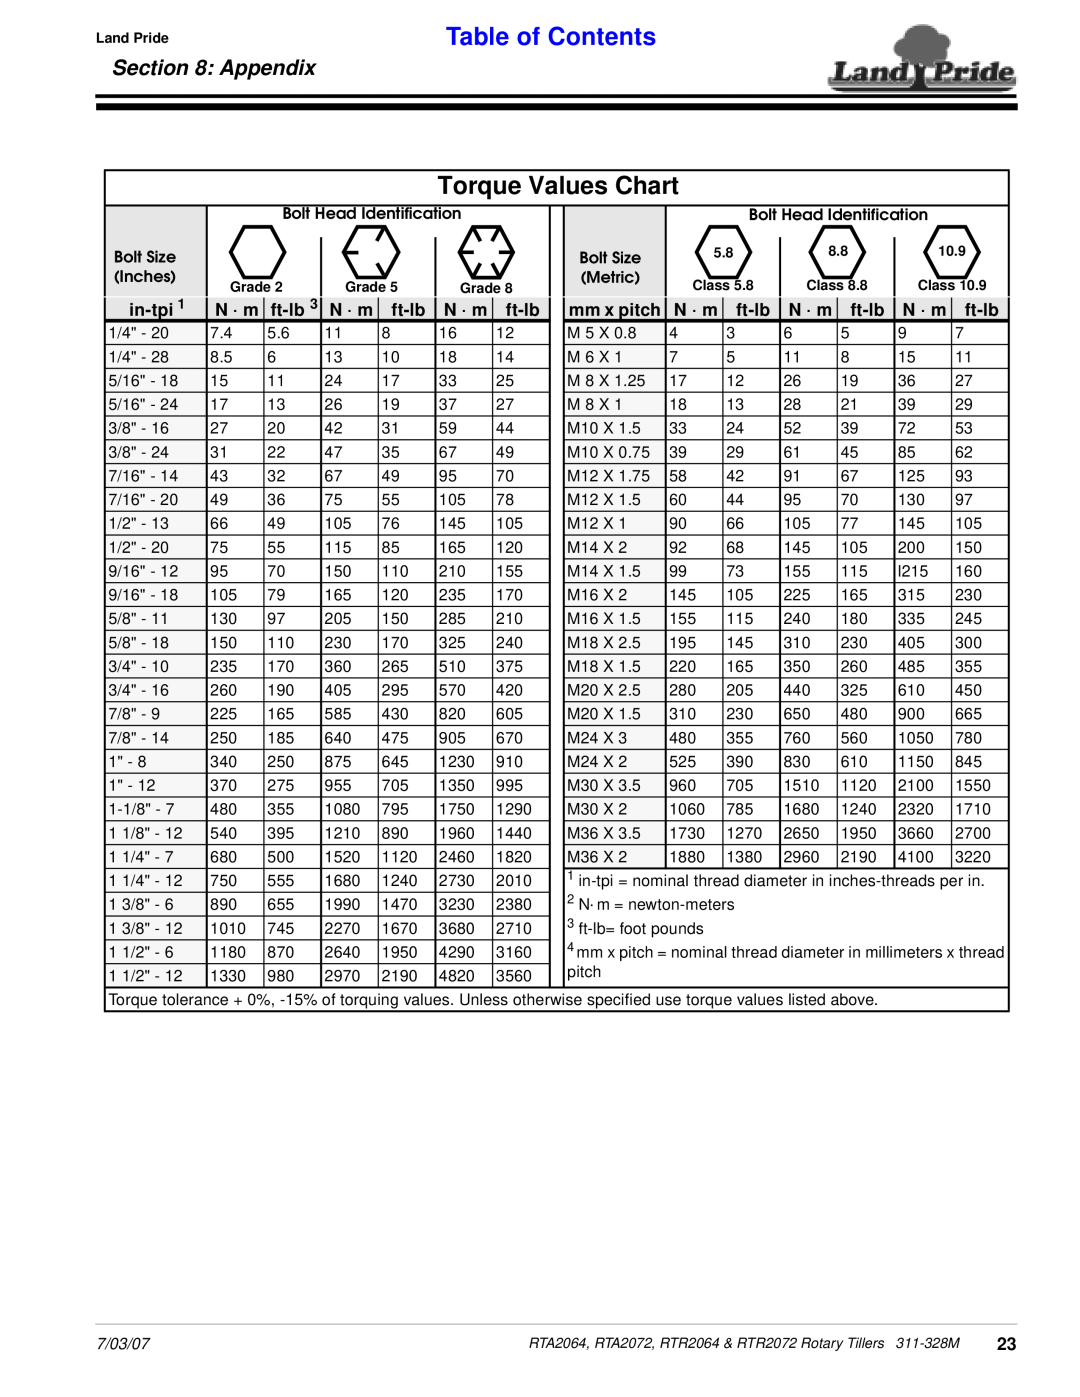 Lowepro RTA2064, RTA2072, RTR2064, RTR2072 manual Torque Values Chart, Appendix, in-tpi, N · m, ft-lb, mm x pitch 